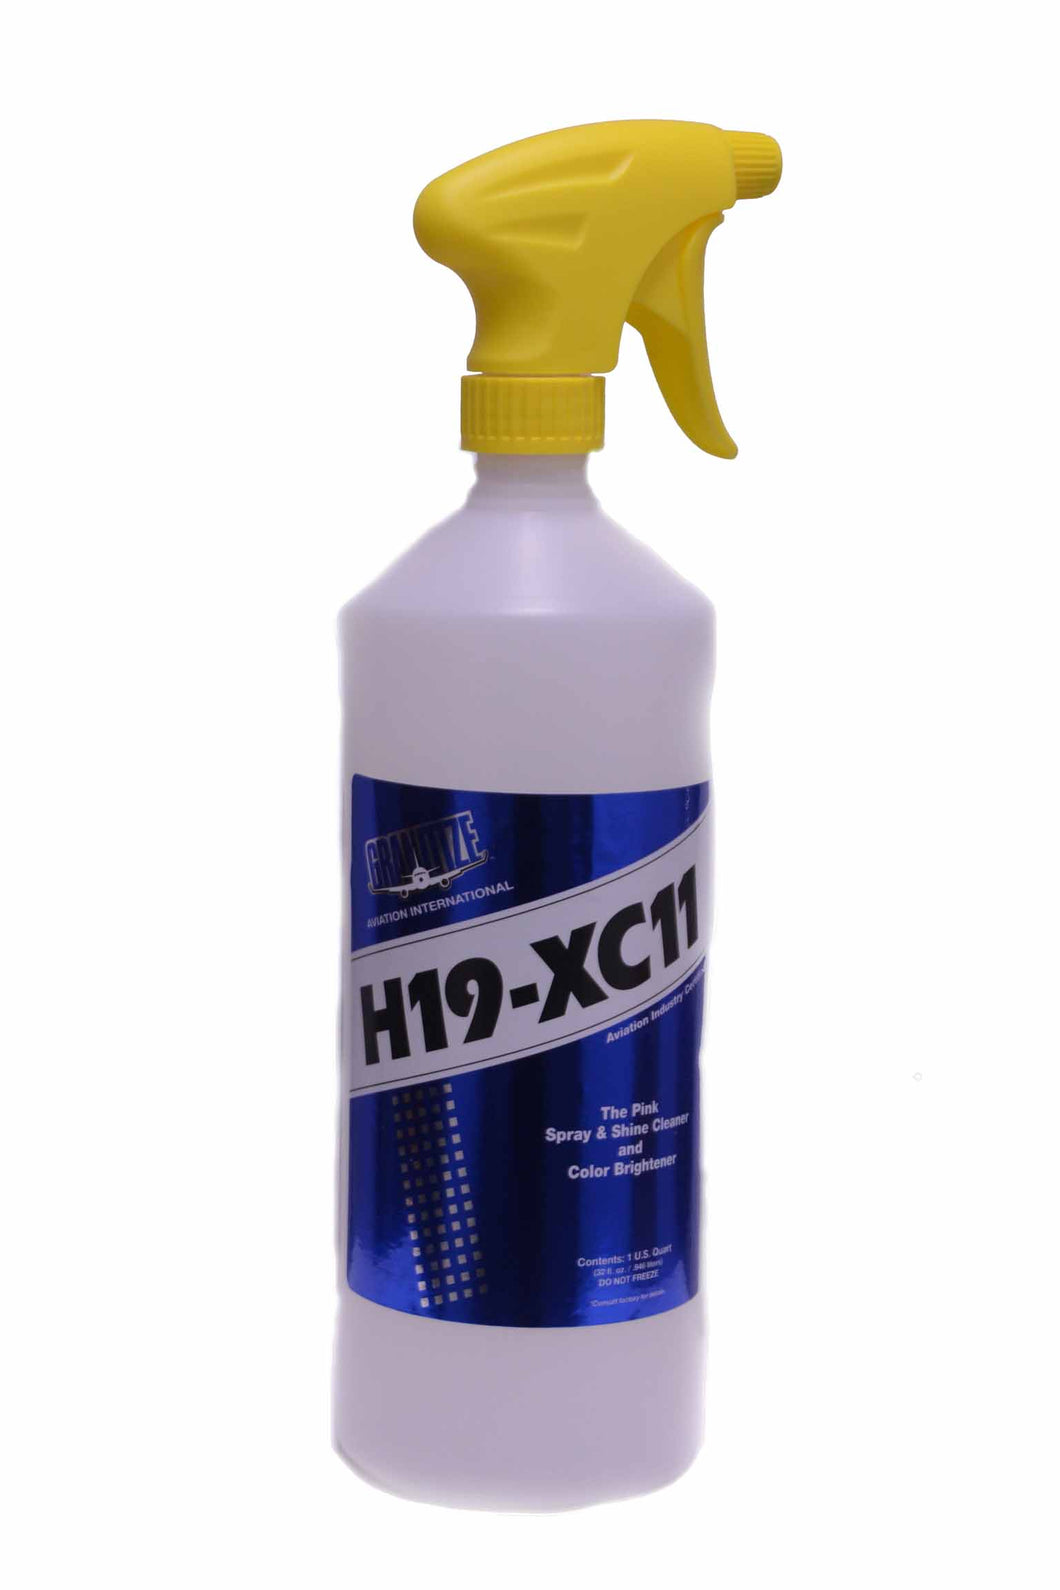 Granitize H19 Spray Bottle + Trigger Sprayer (Empty)